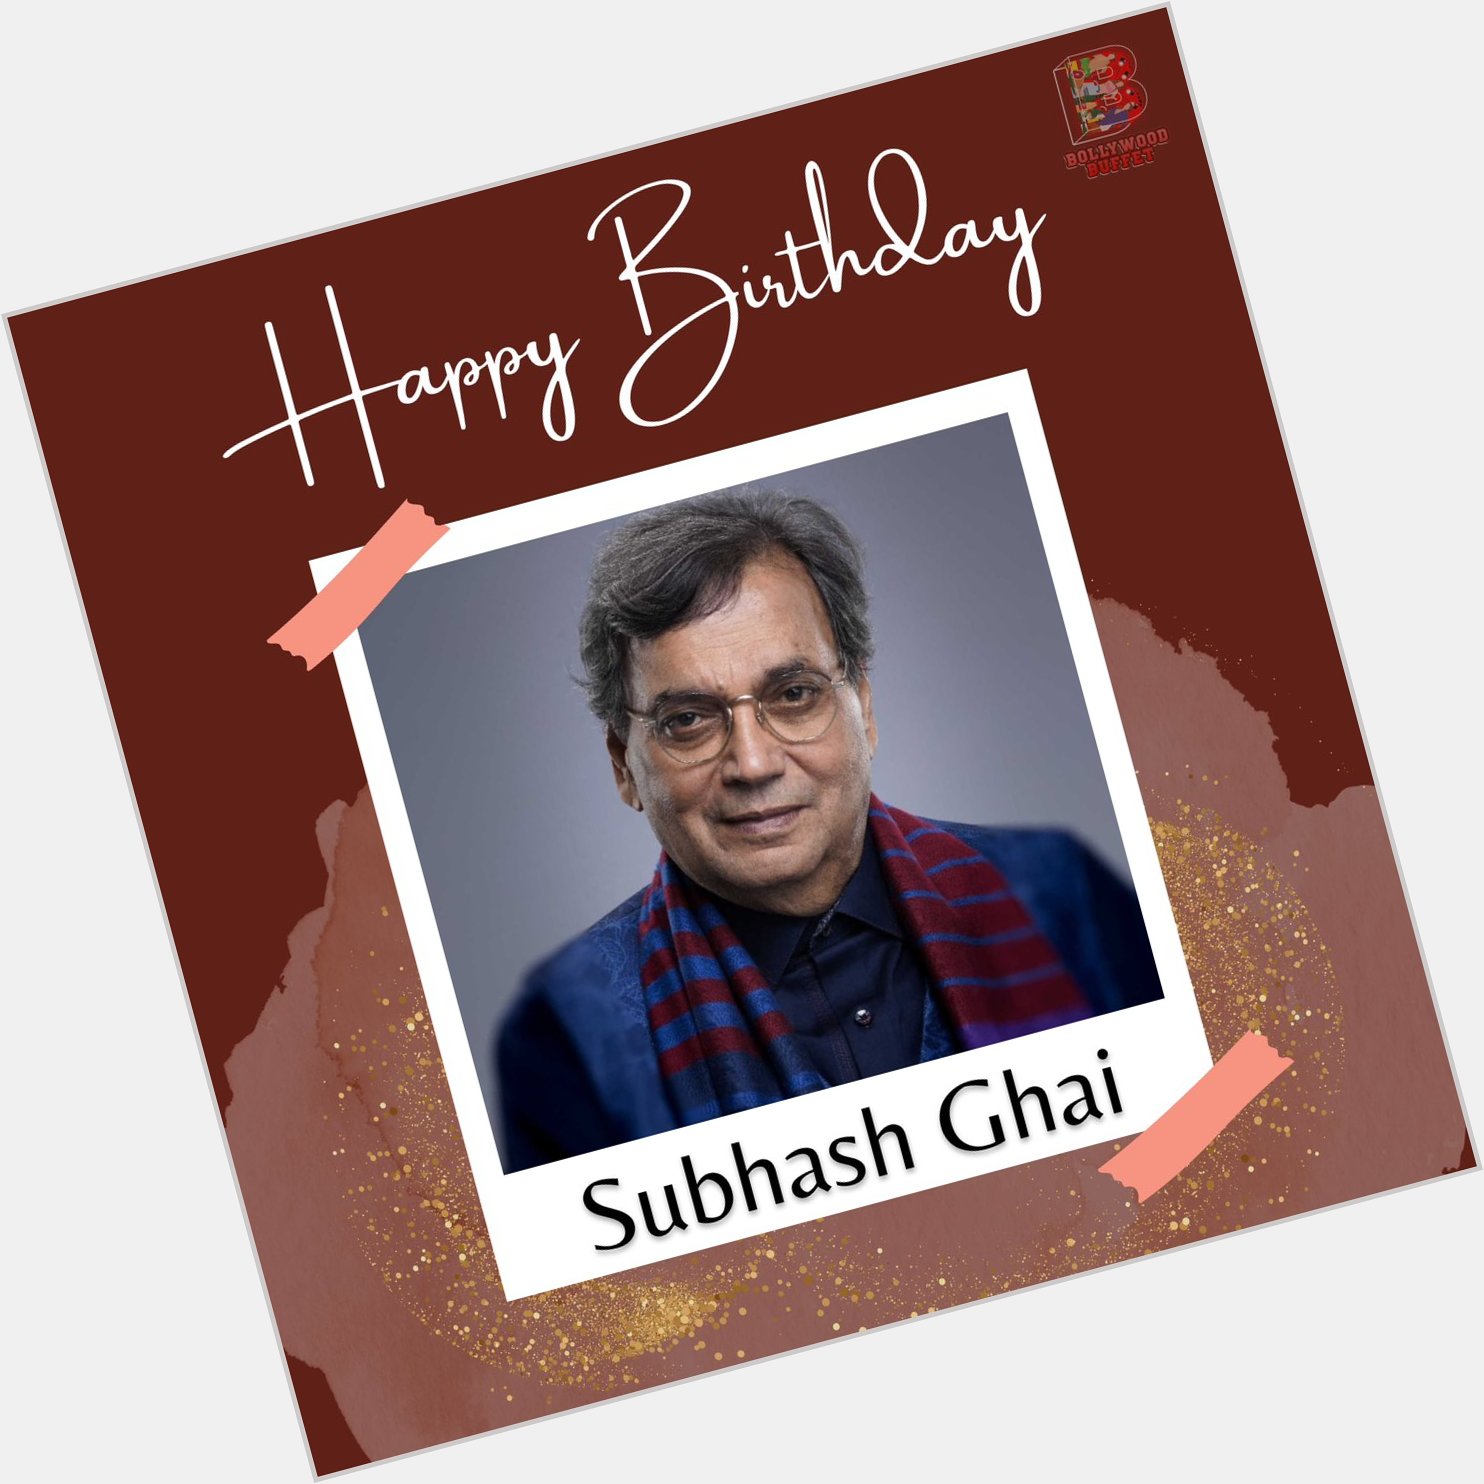 Happy birthday Subhash Ghai      